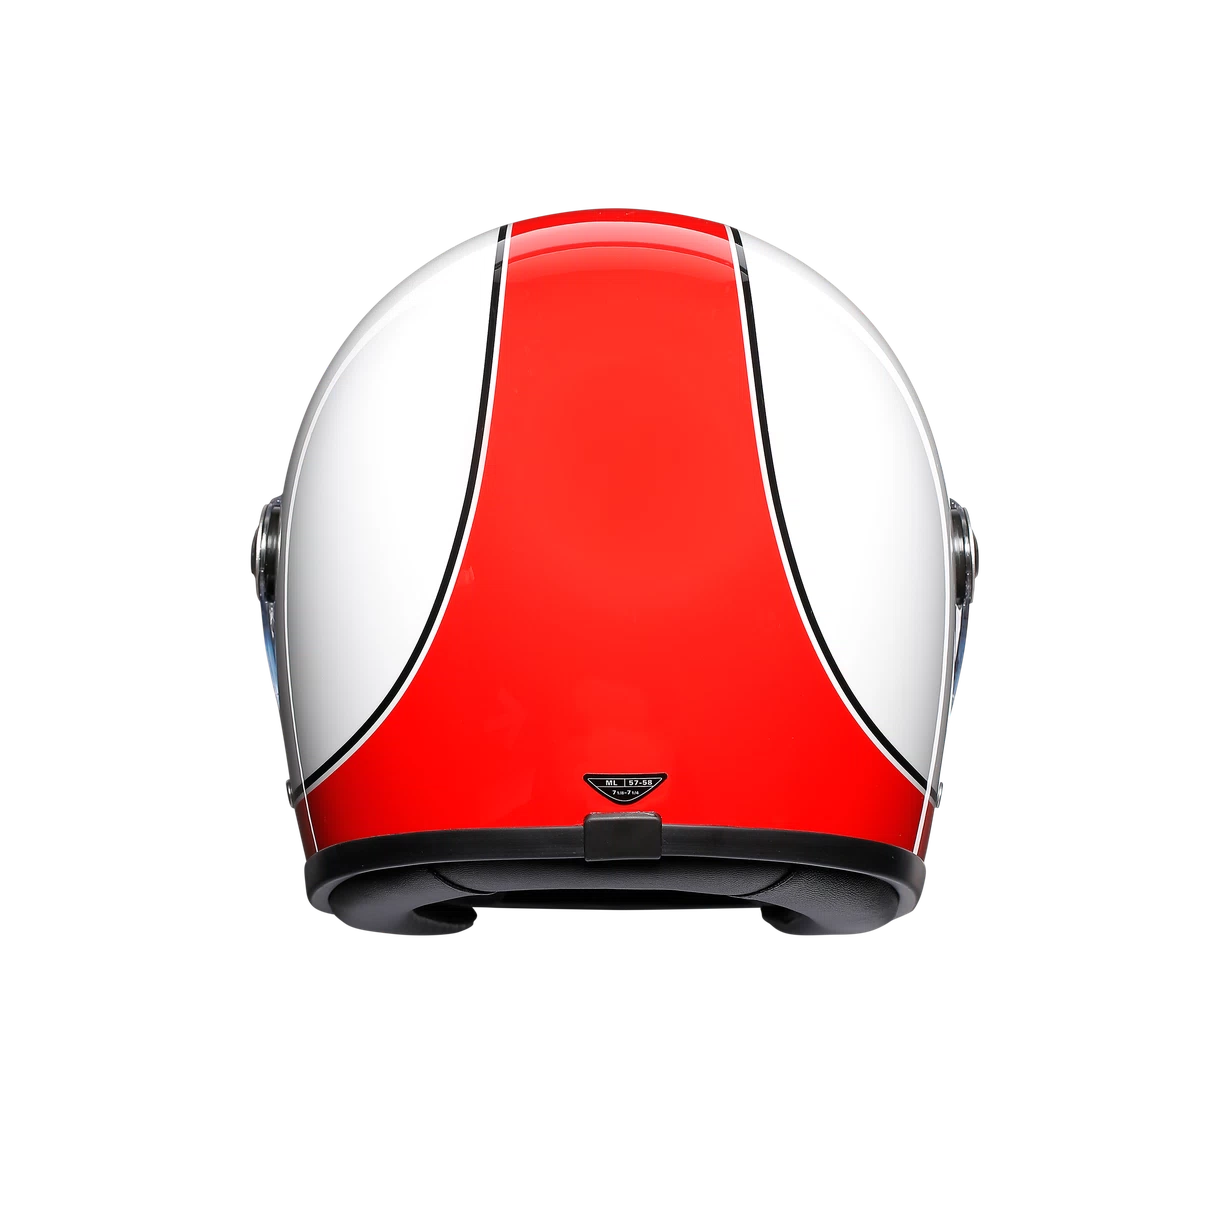 [SALE] AGV X3000 Multi E2205 Super Helmet - Red/White